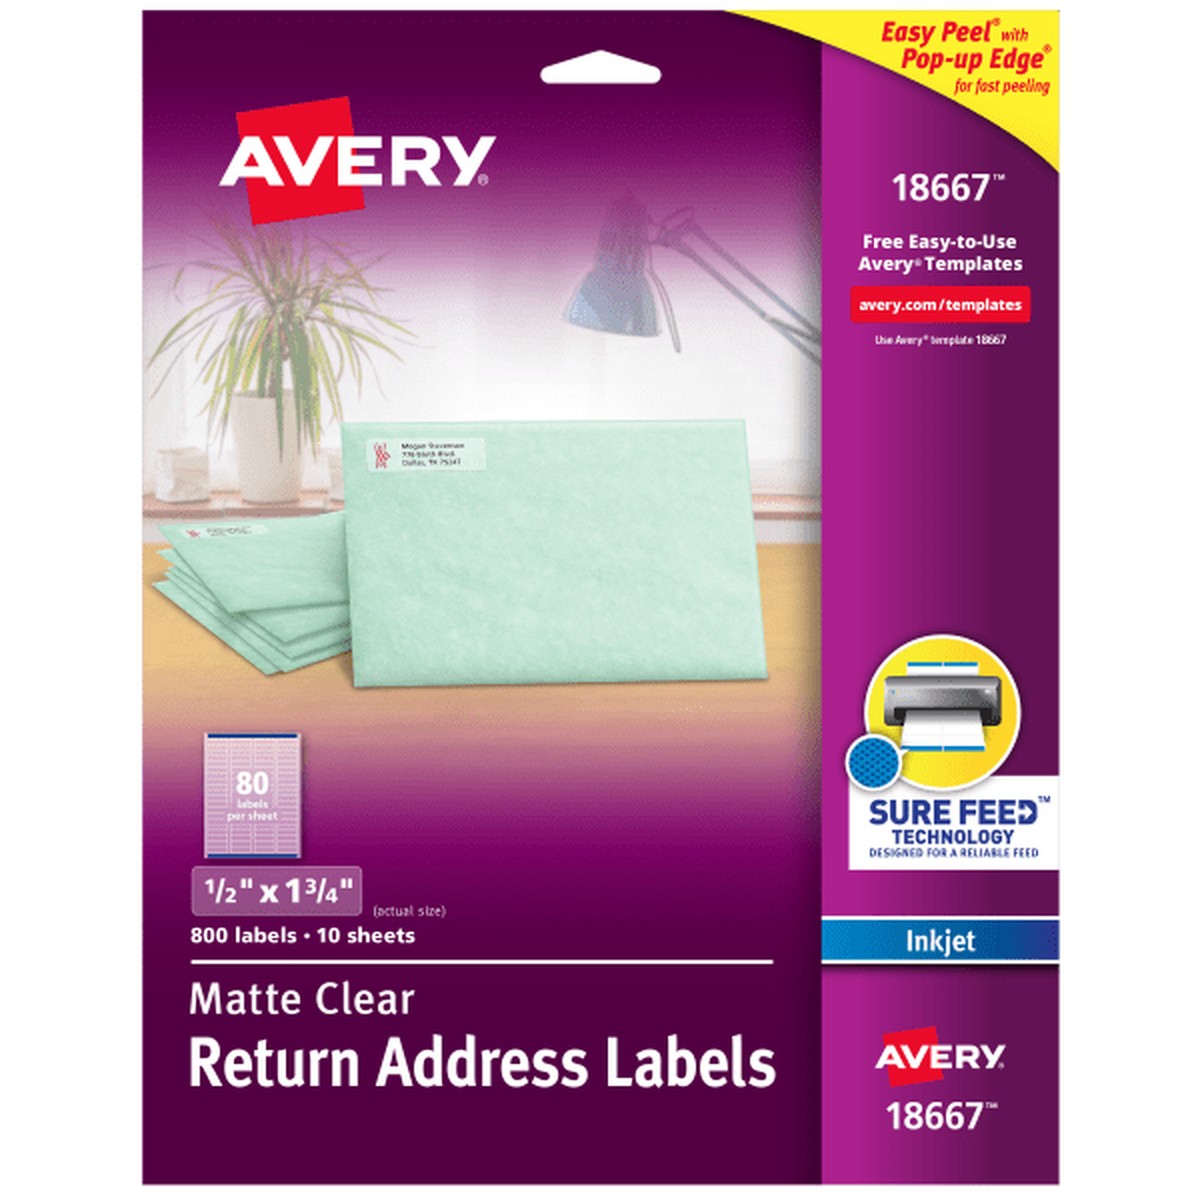 Avery Easy Peel Inkjet Printer Mailing Labels - 1/2" Width x 1 3/4" Length - Permanent Adhesive - Rectangle - Inkjet - Clea